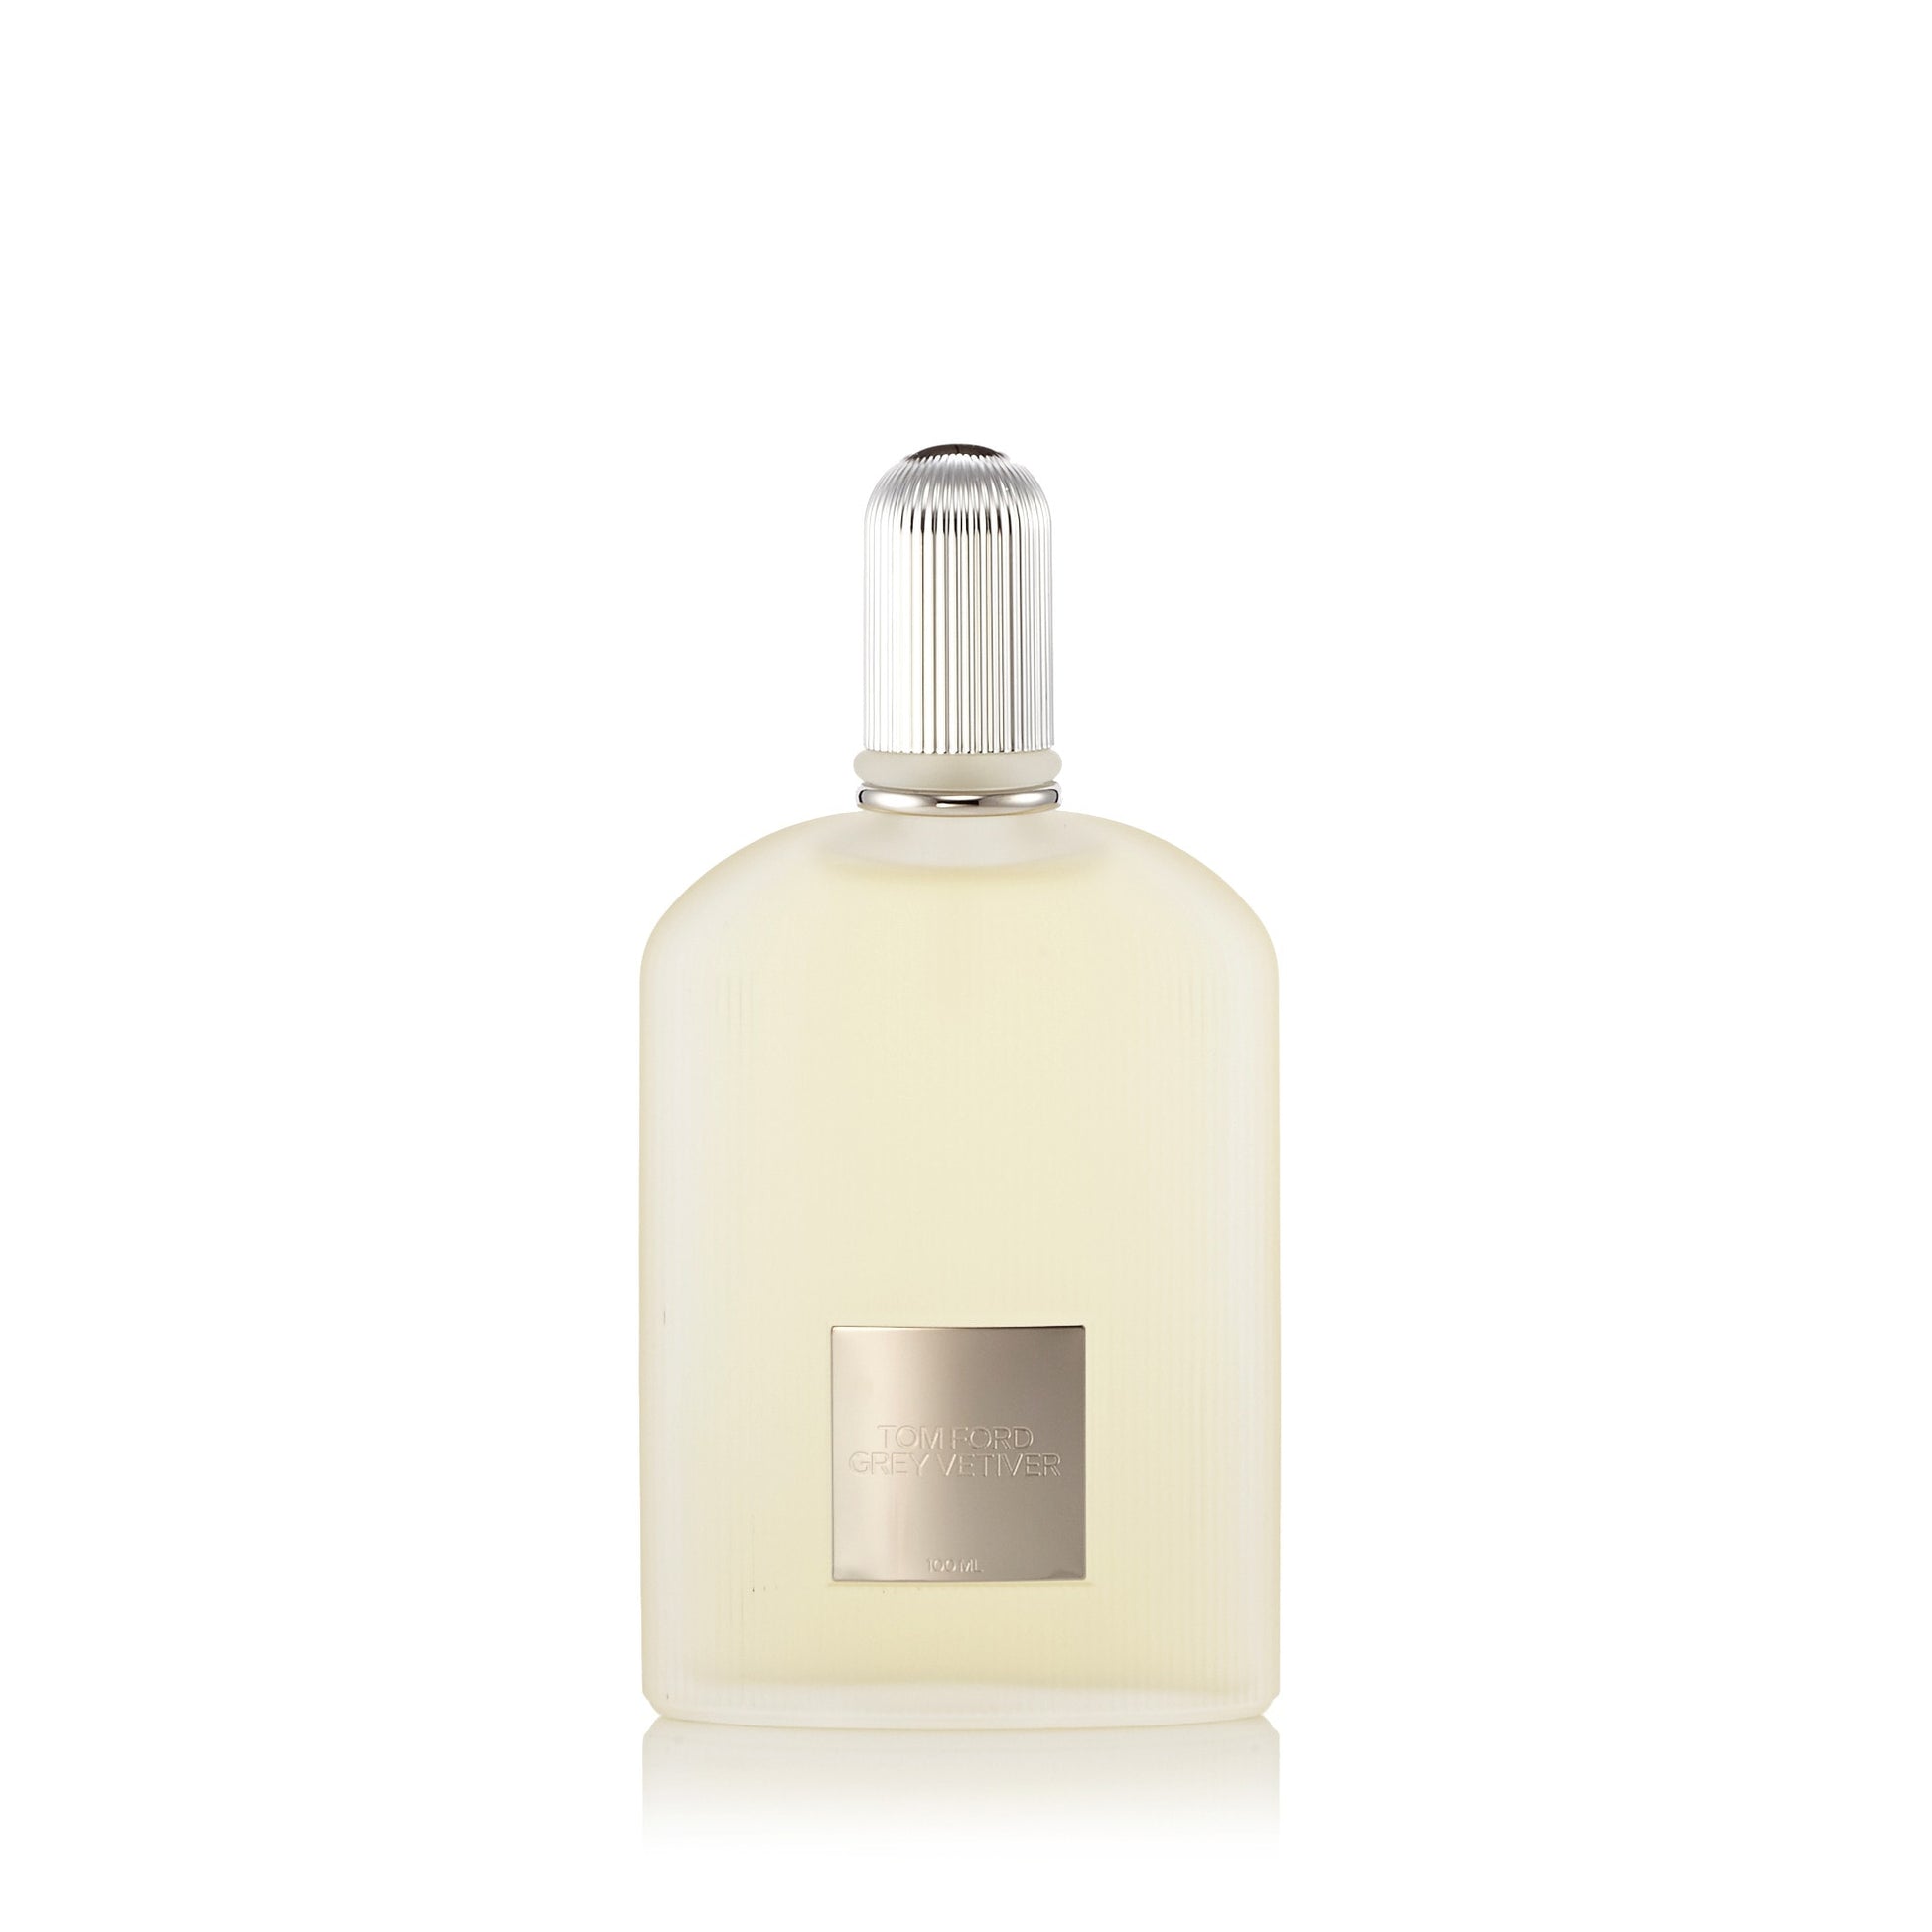 Grey Vetiver Eau de Parfum Spray for Men by Tom Ford, Product image 2